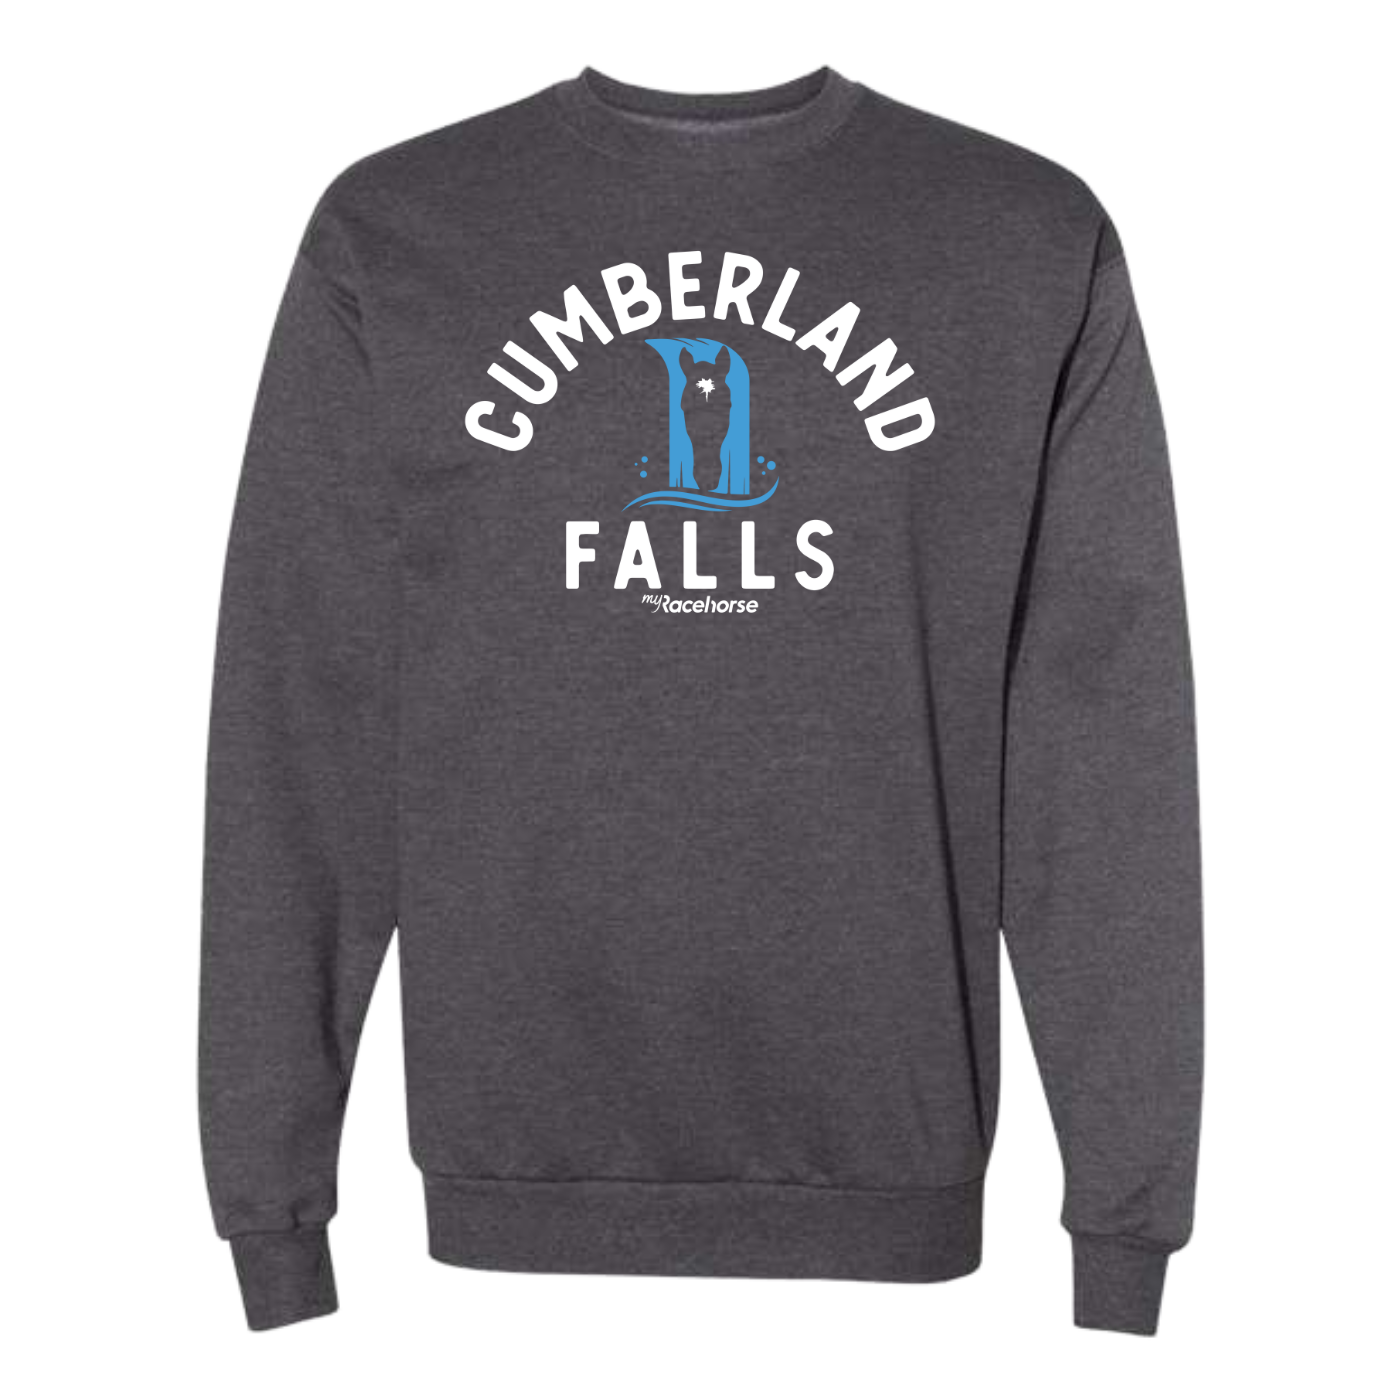 Cumberland Falls Crewneck Sweatshirt